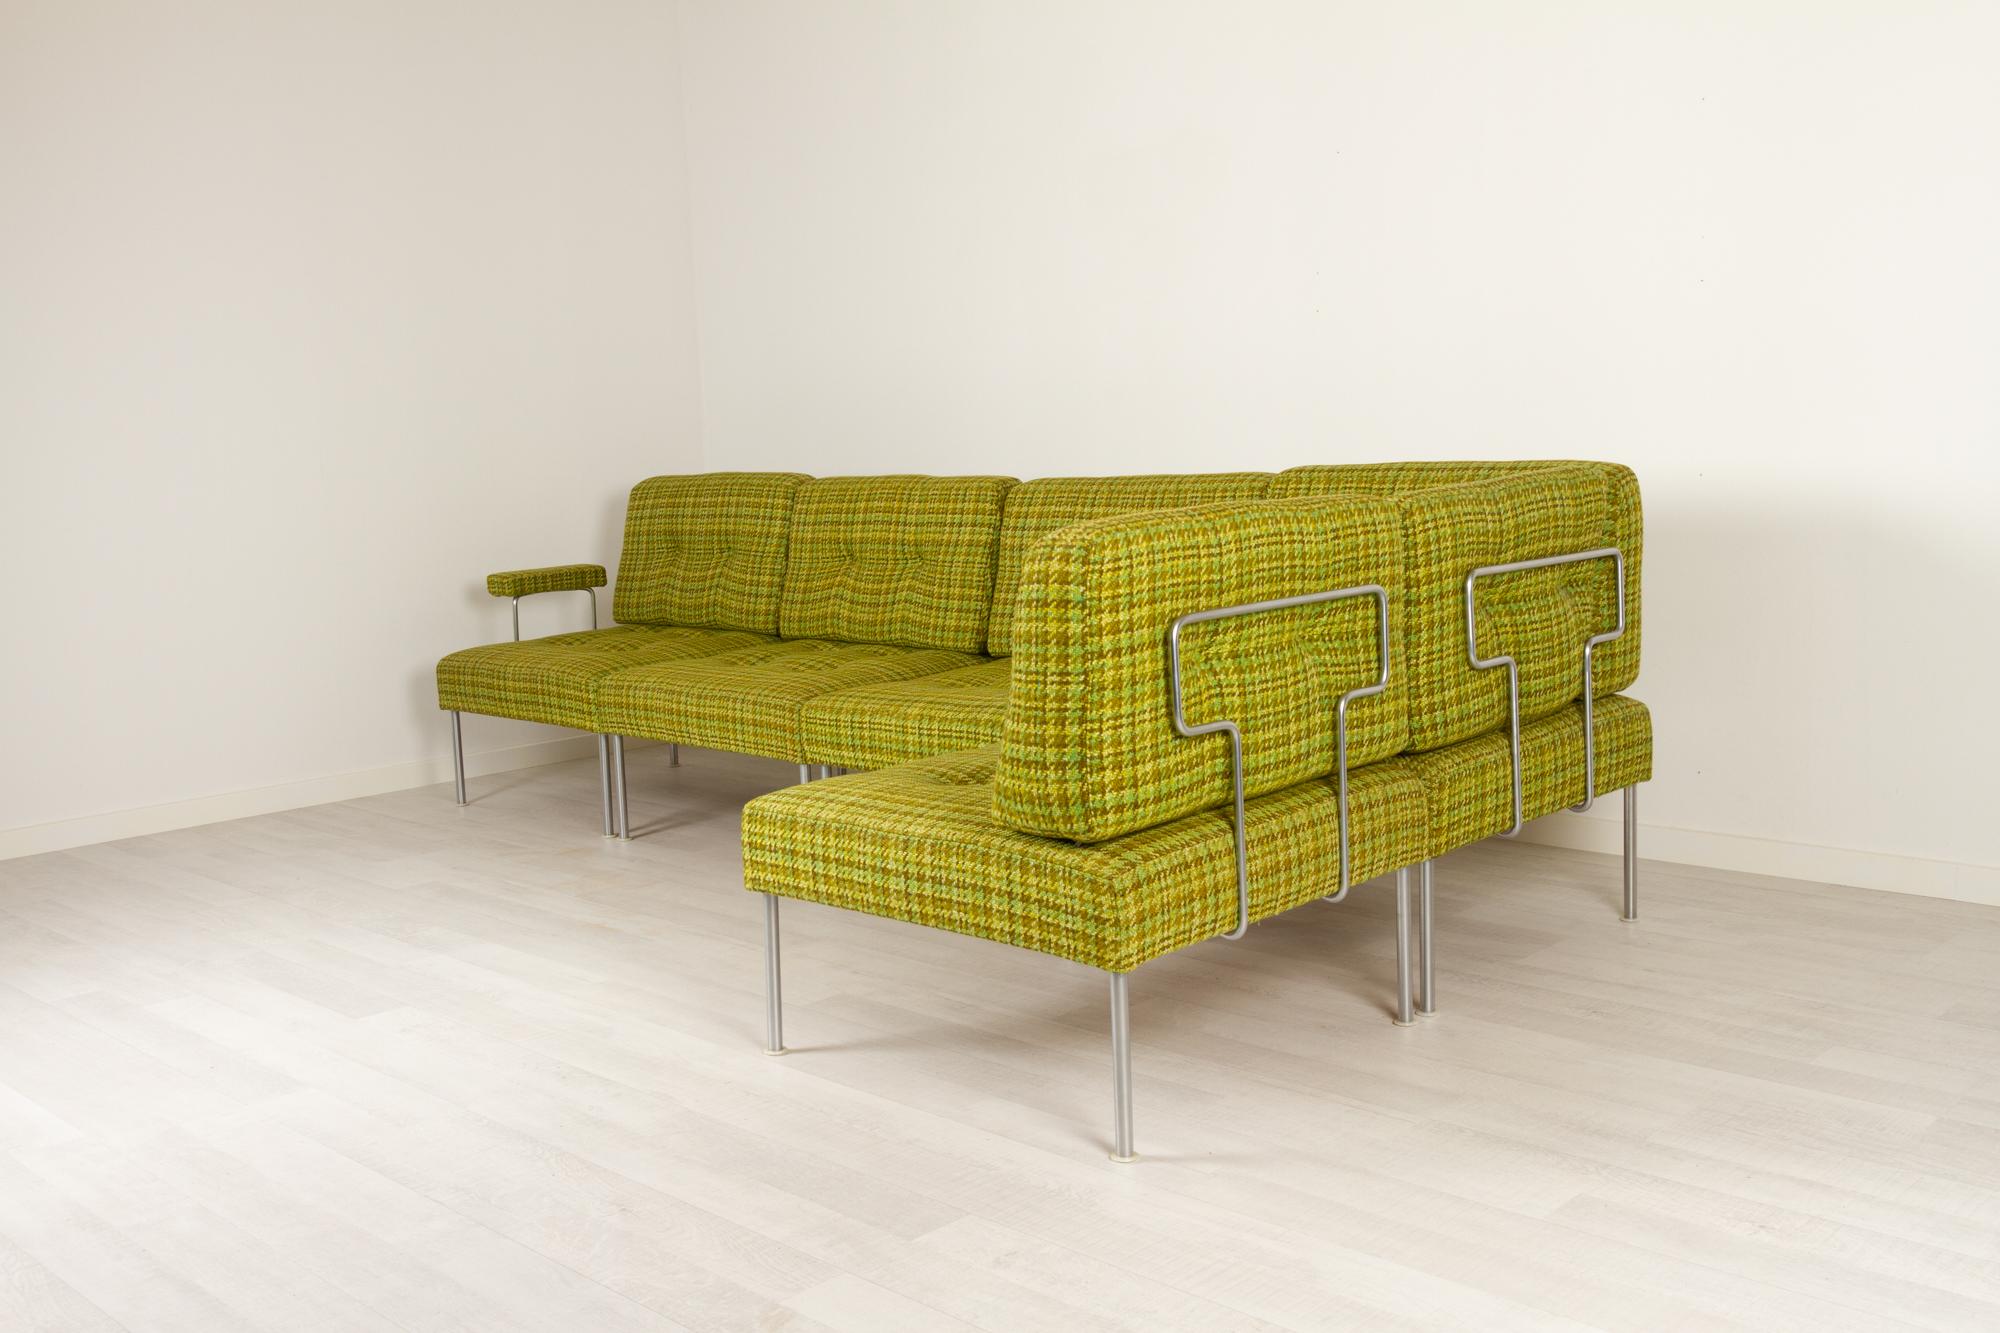 Steel Vintage Danish Modular Revolte Sofa by Poul Cadovius for Cado, 1970s